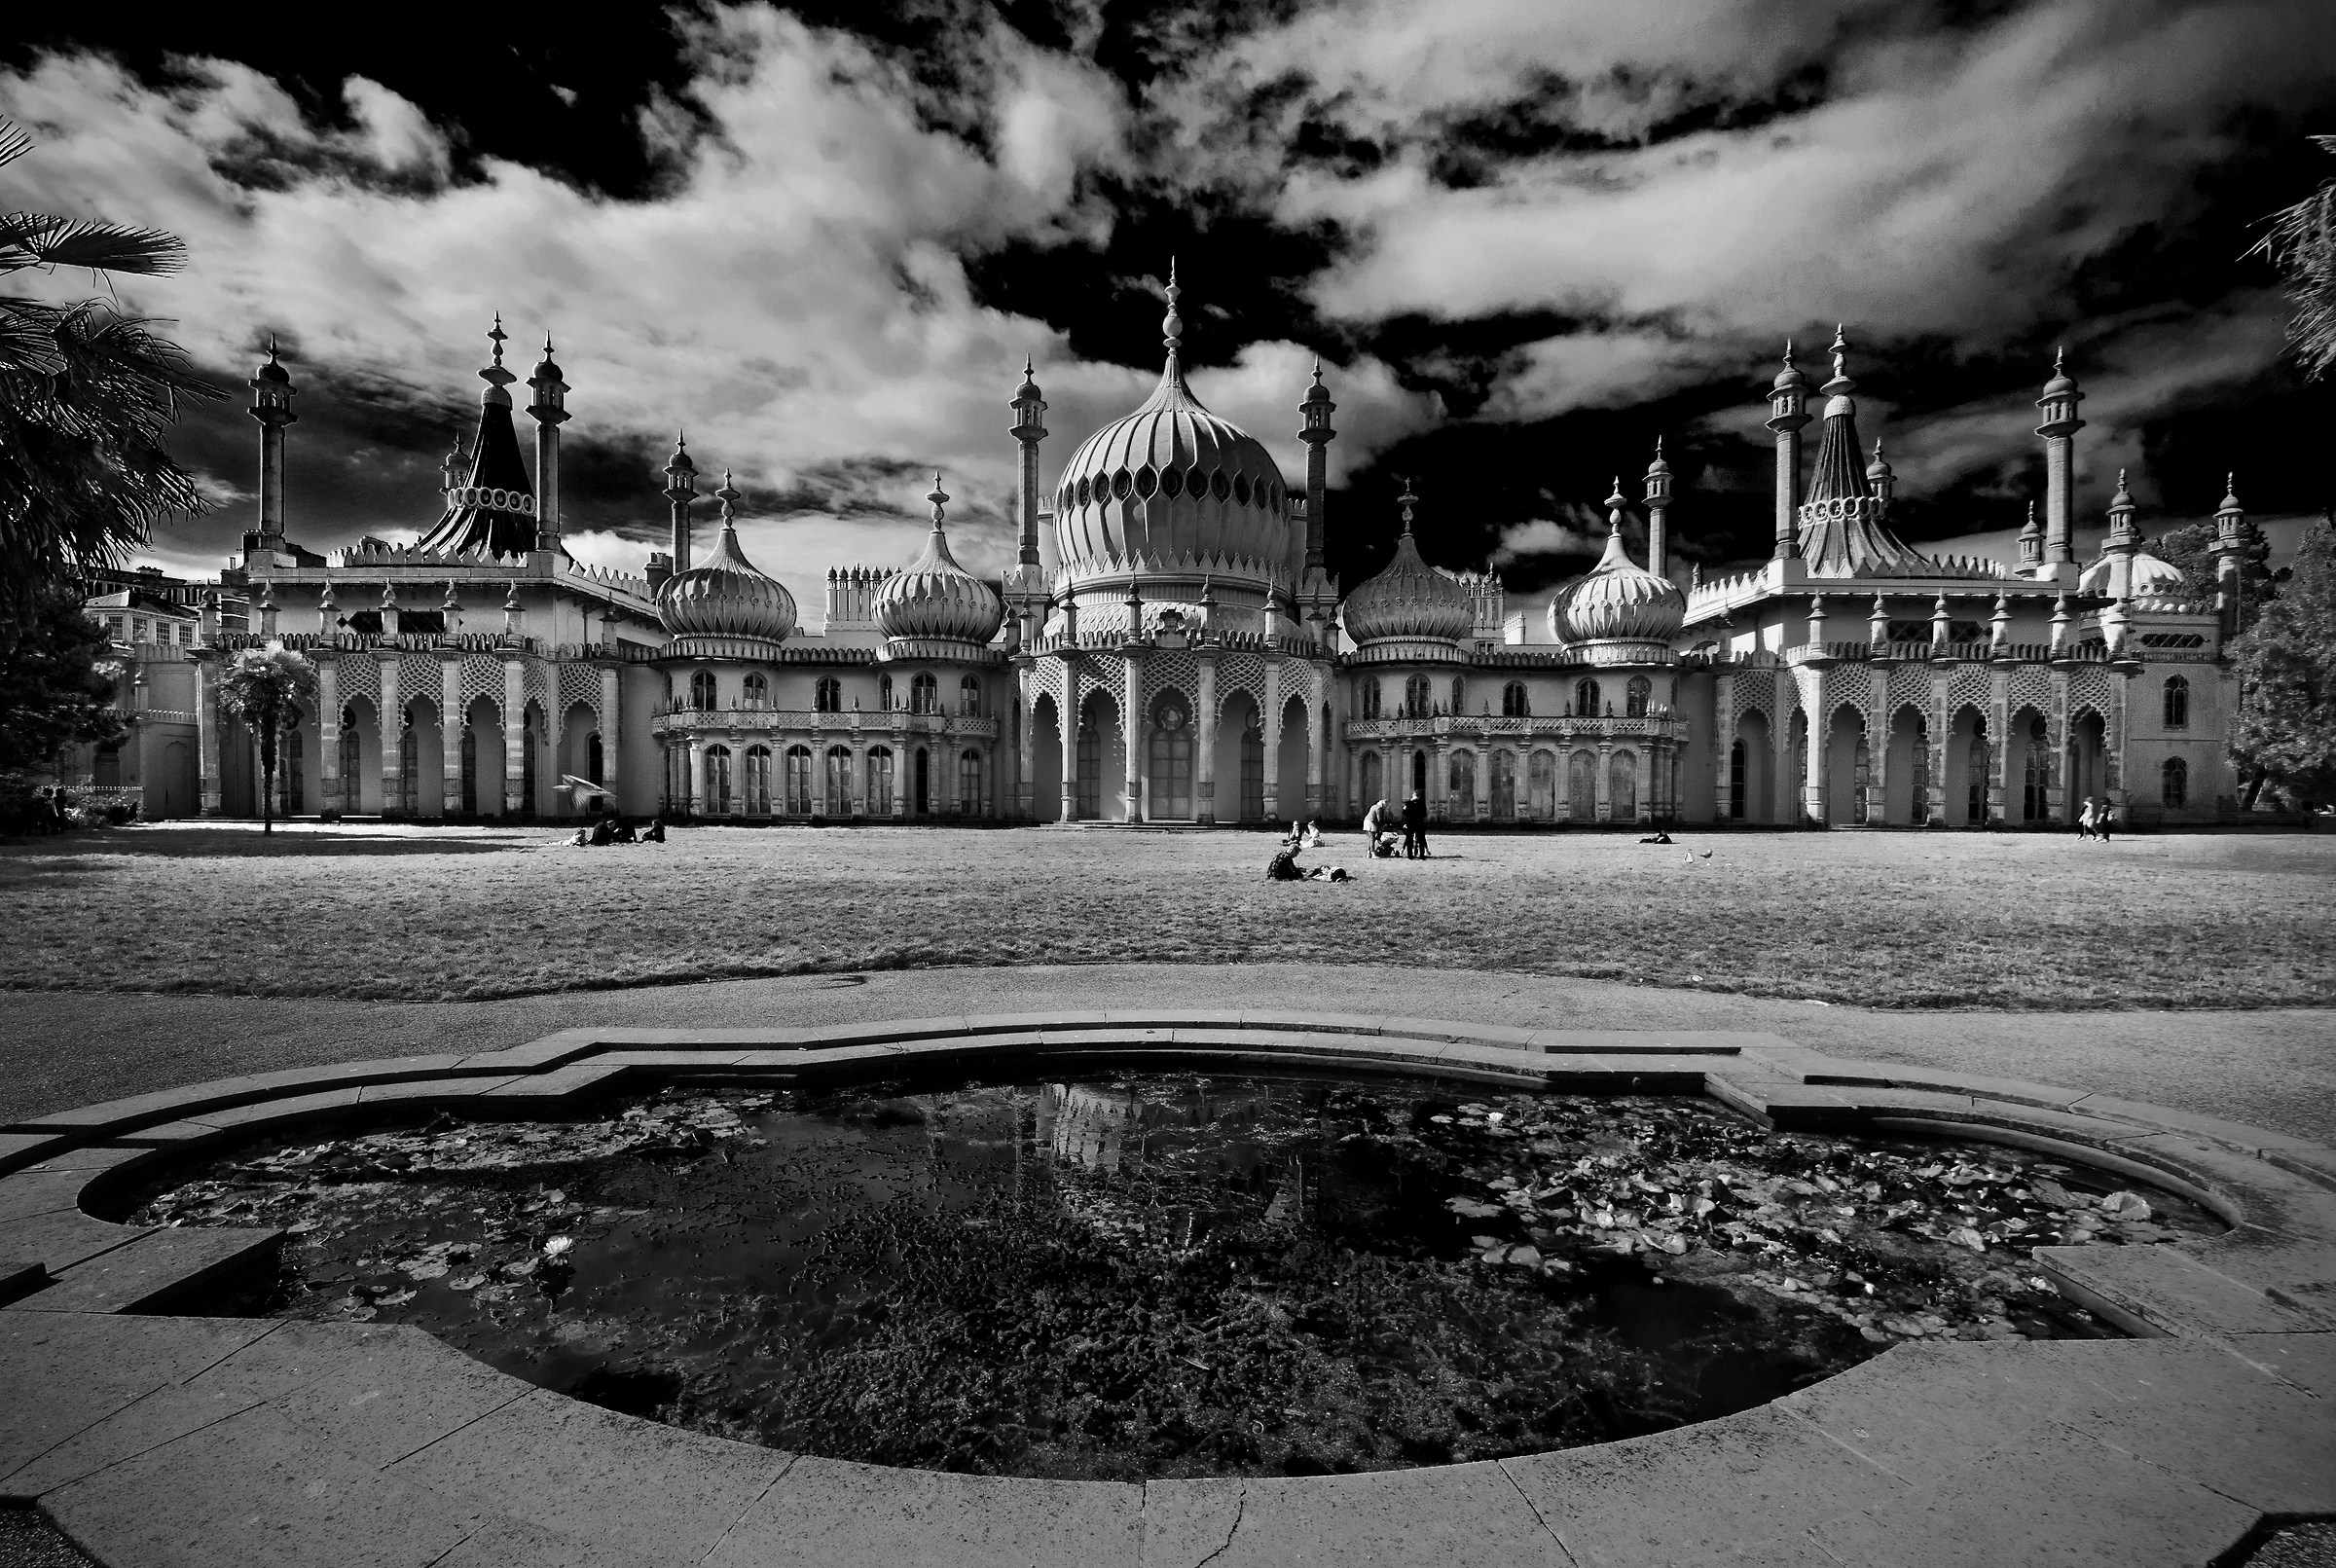 Brighton's Royal Pavilion - England, or India??...